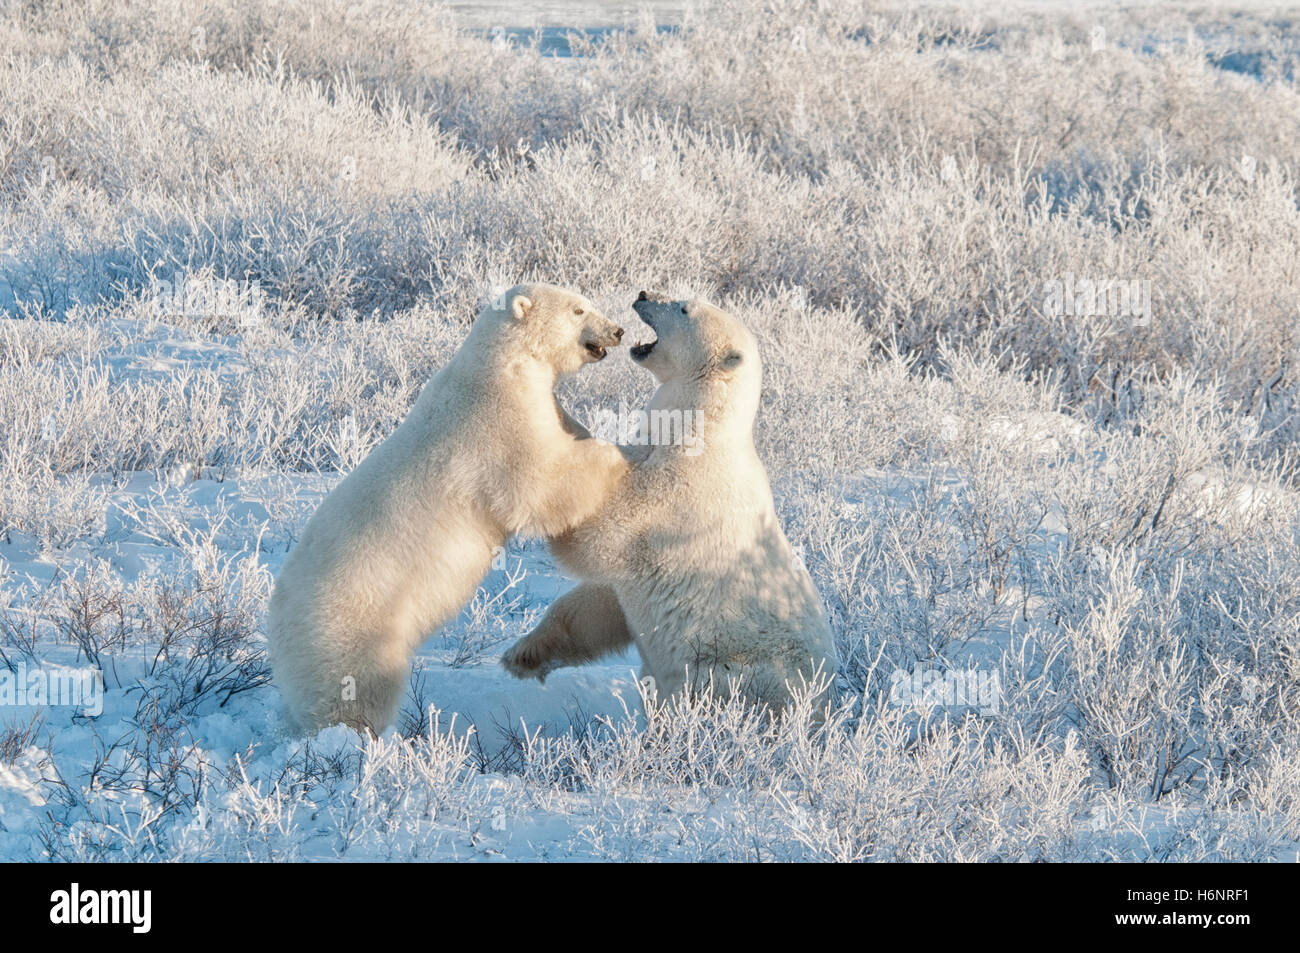 Polar Bears, Ursus maritimus, play fighting in the frost, early morning light near Hudson Bay, Cape Churchill, Manitoba, Canada Stock Photo